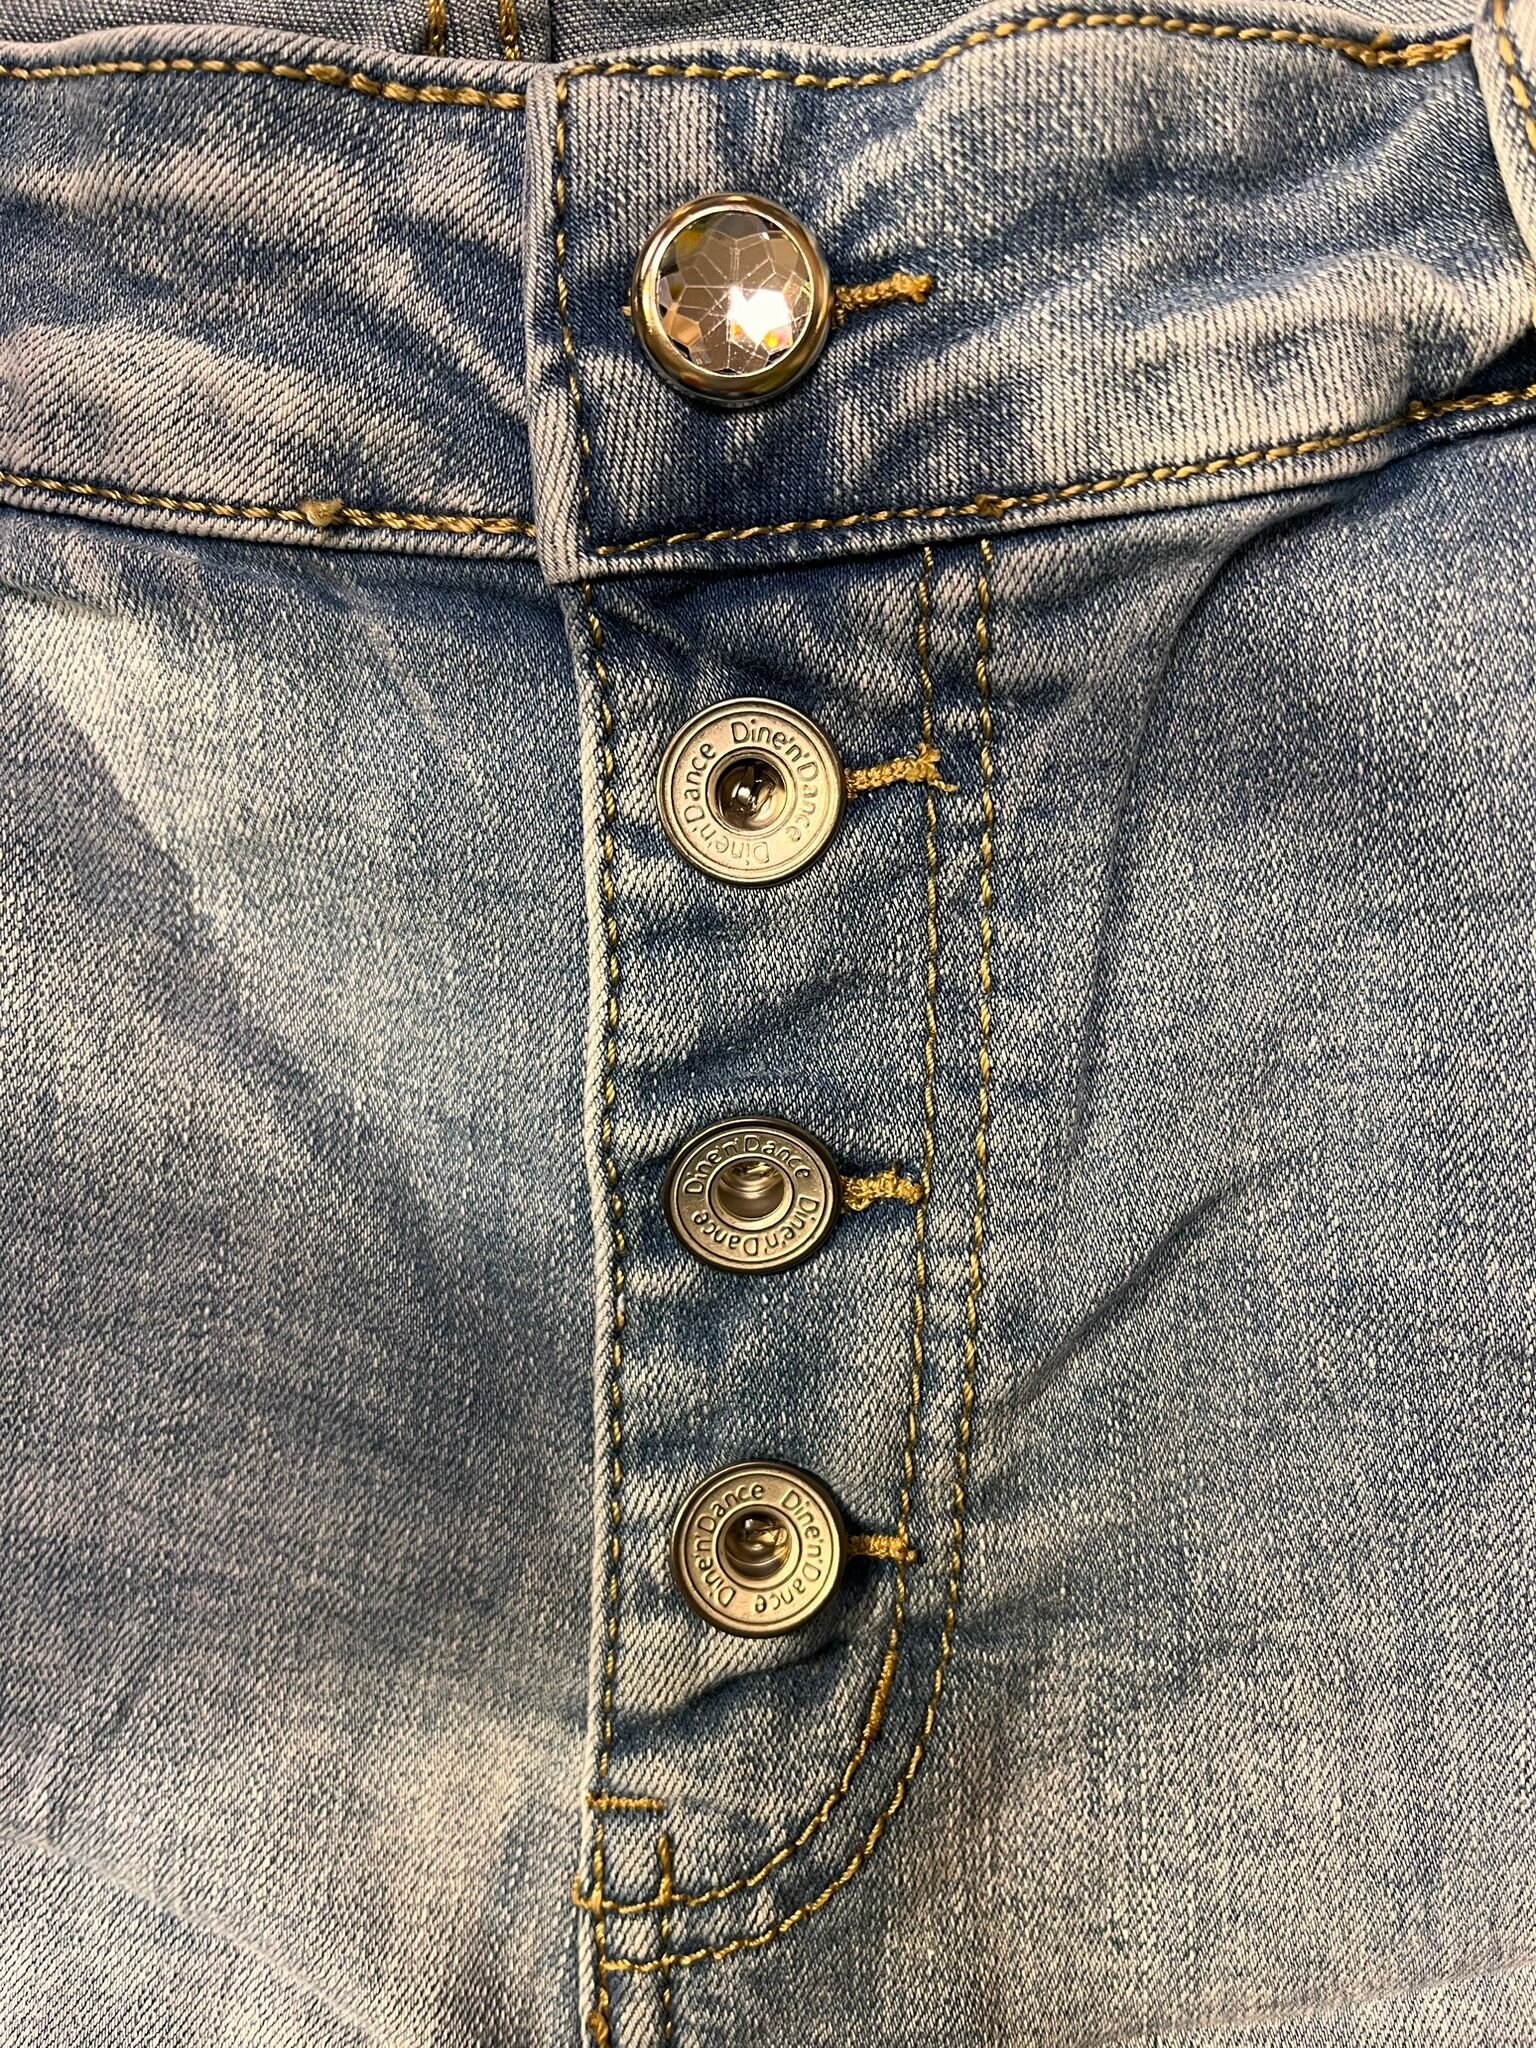 Jeans JP2622 - Diamond button - Light wash